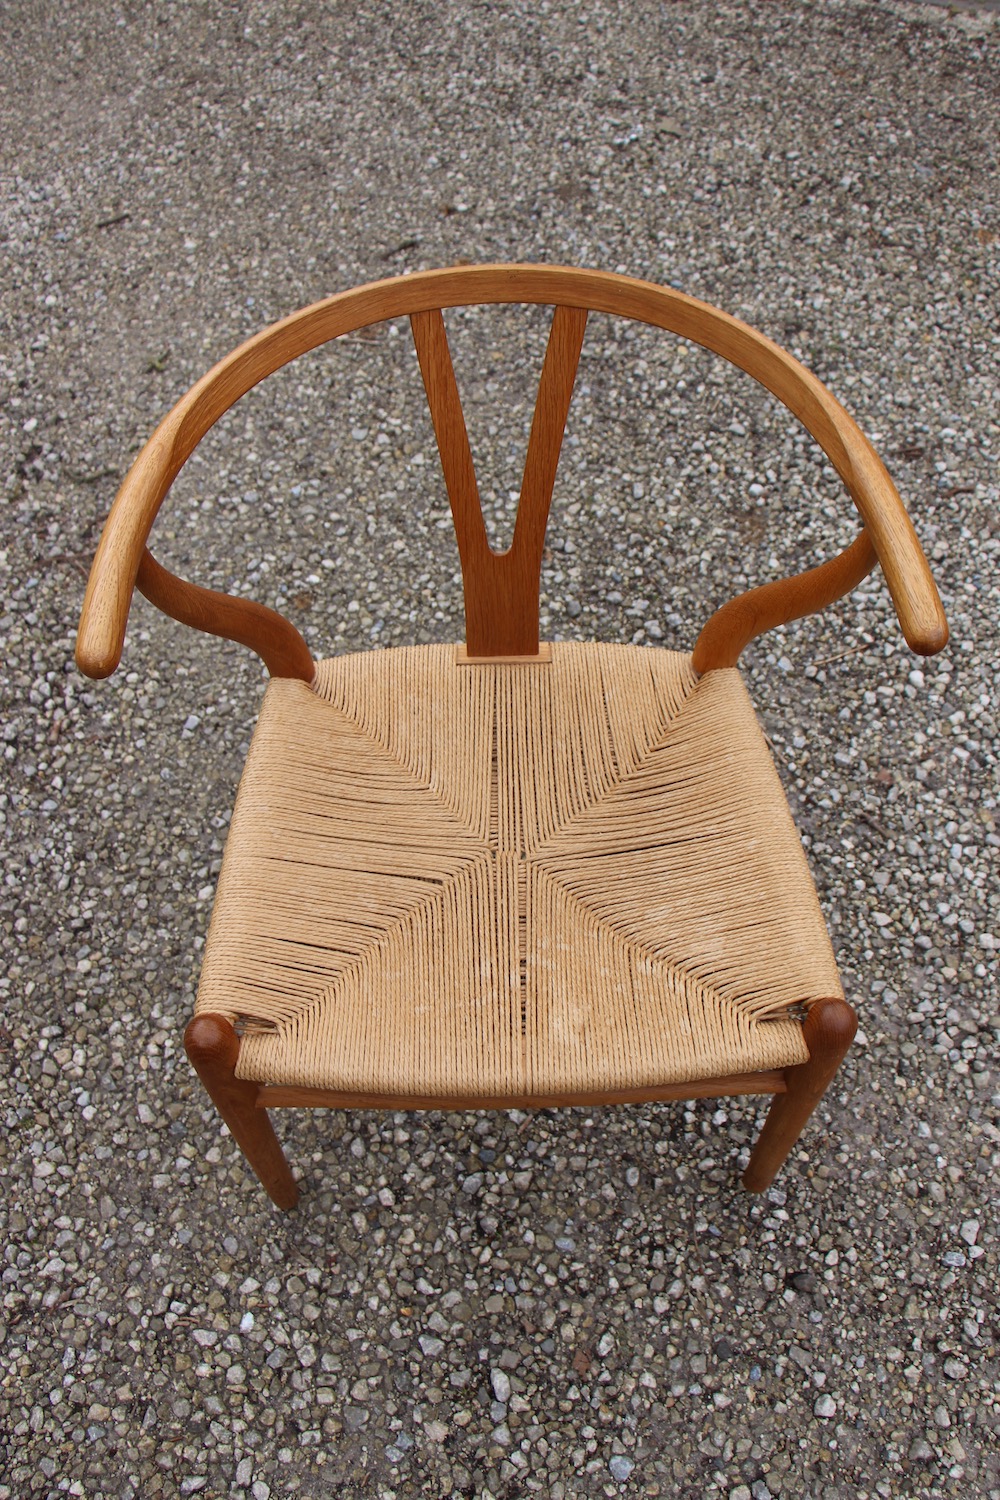 vintage Hans Wegner wishbone chair, Y chair, Carl Hansen